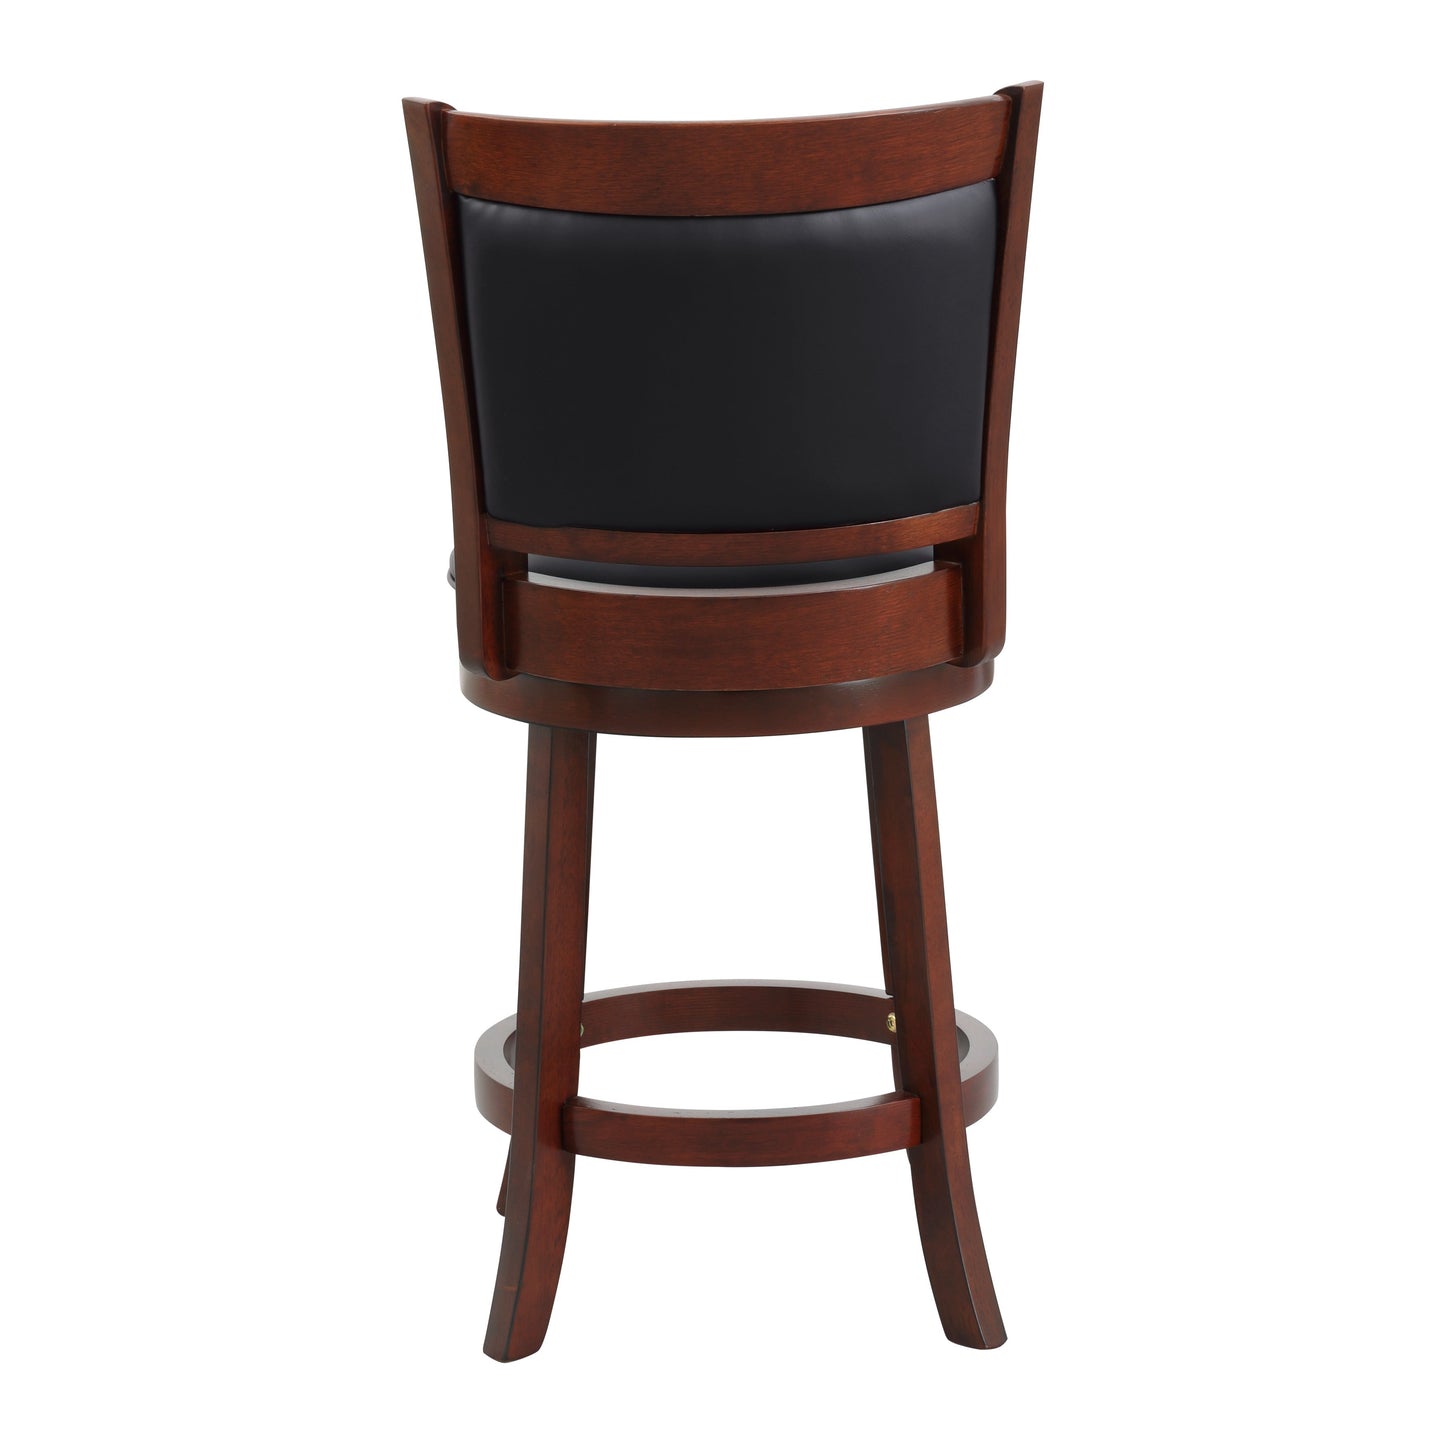 Shapel Dark Cherry Swivel Counter Height Chair